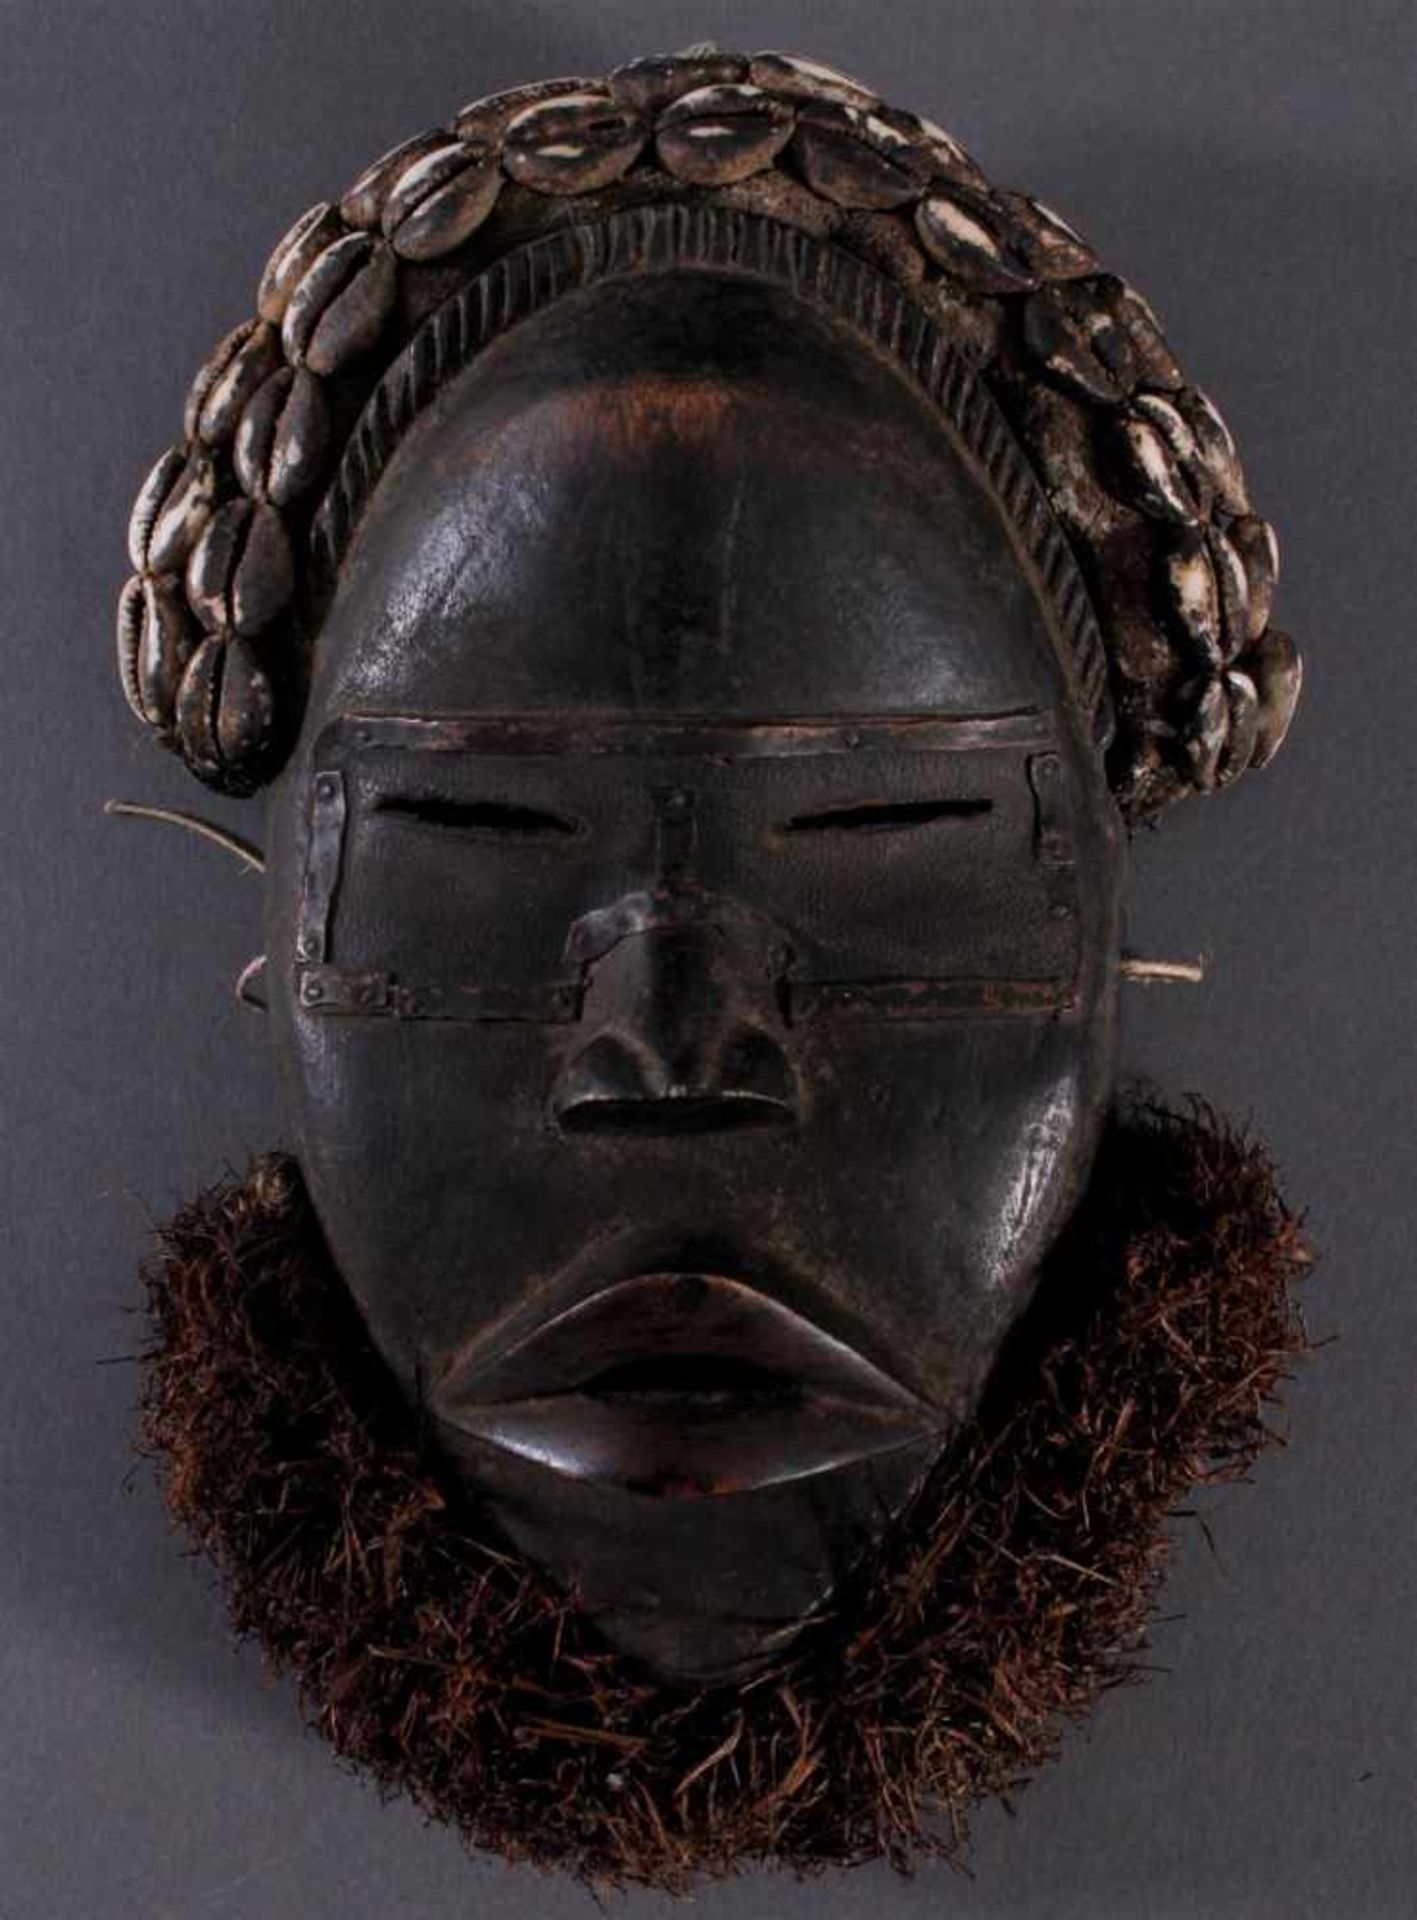 Antike Maske der Dan, LiberiaHolz, geschnitzt, dunkle Patina, Stoff Haar mit Muschelverzierung, Bart